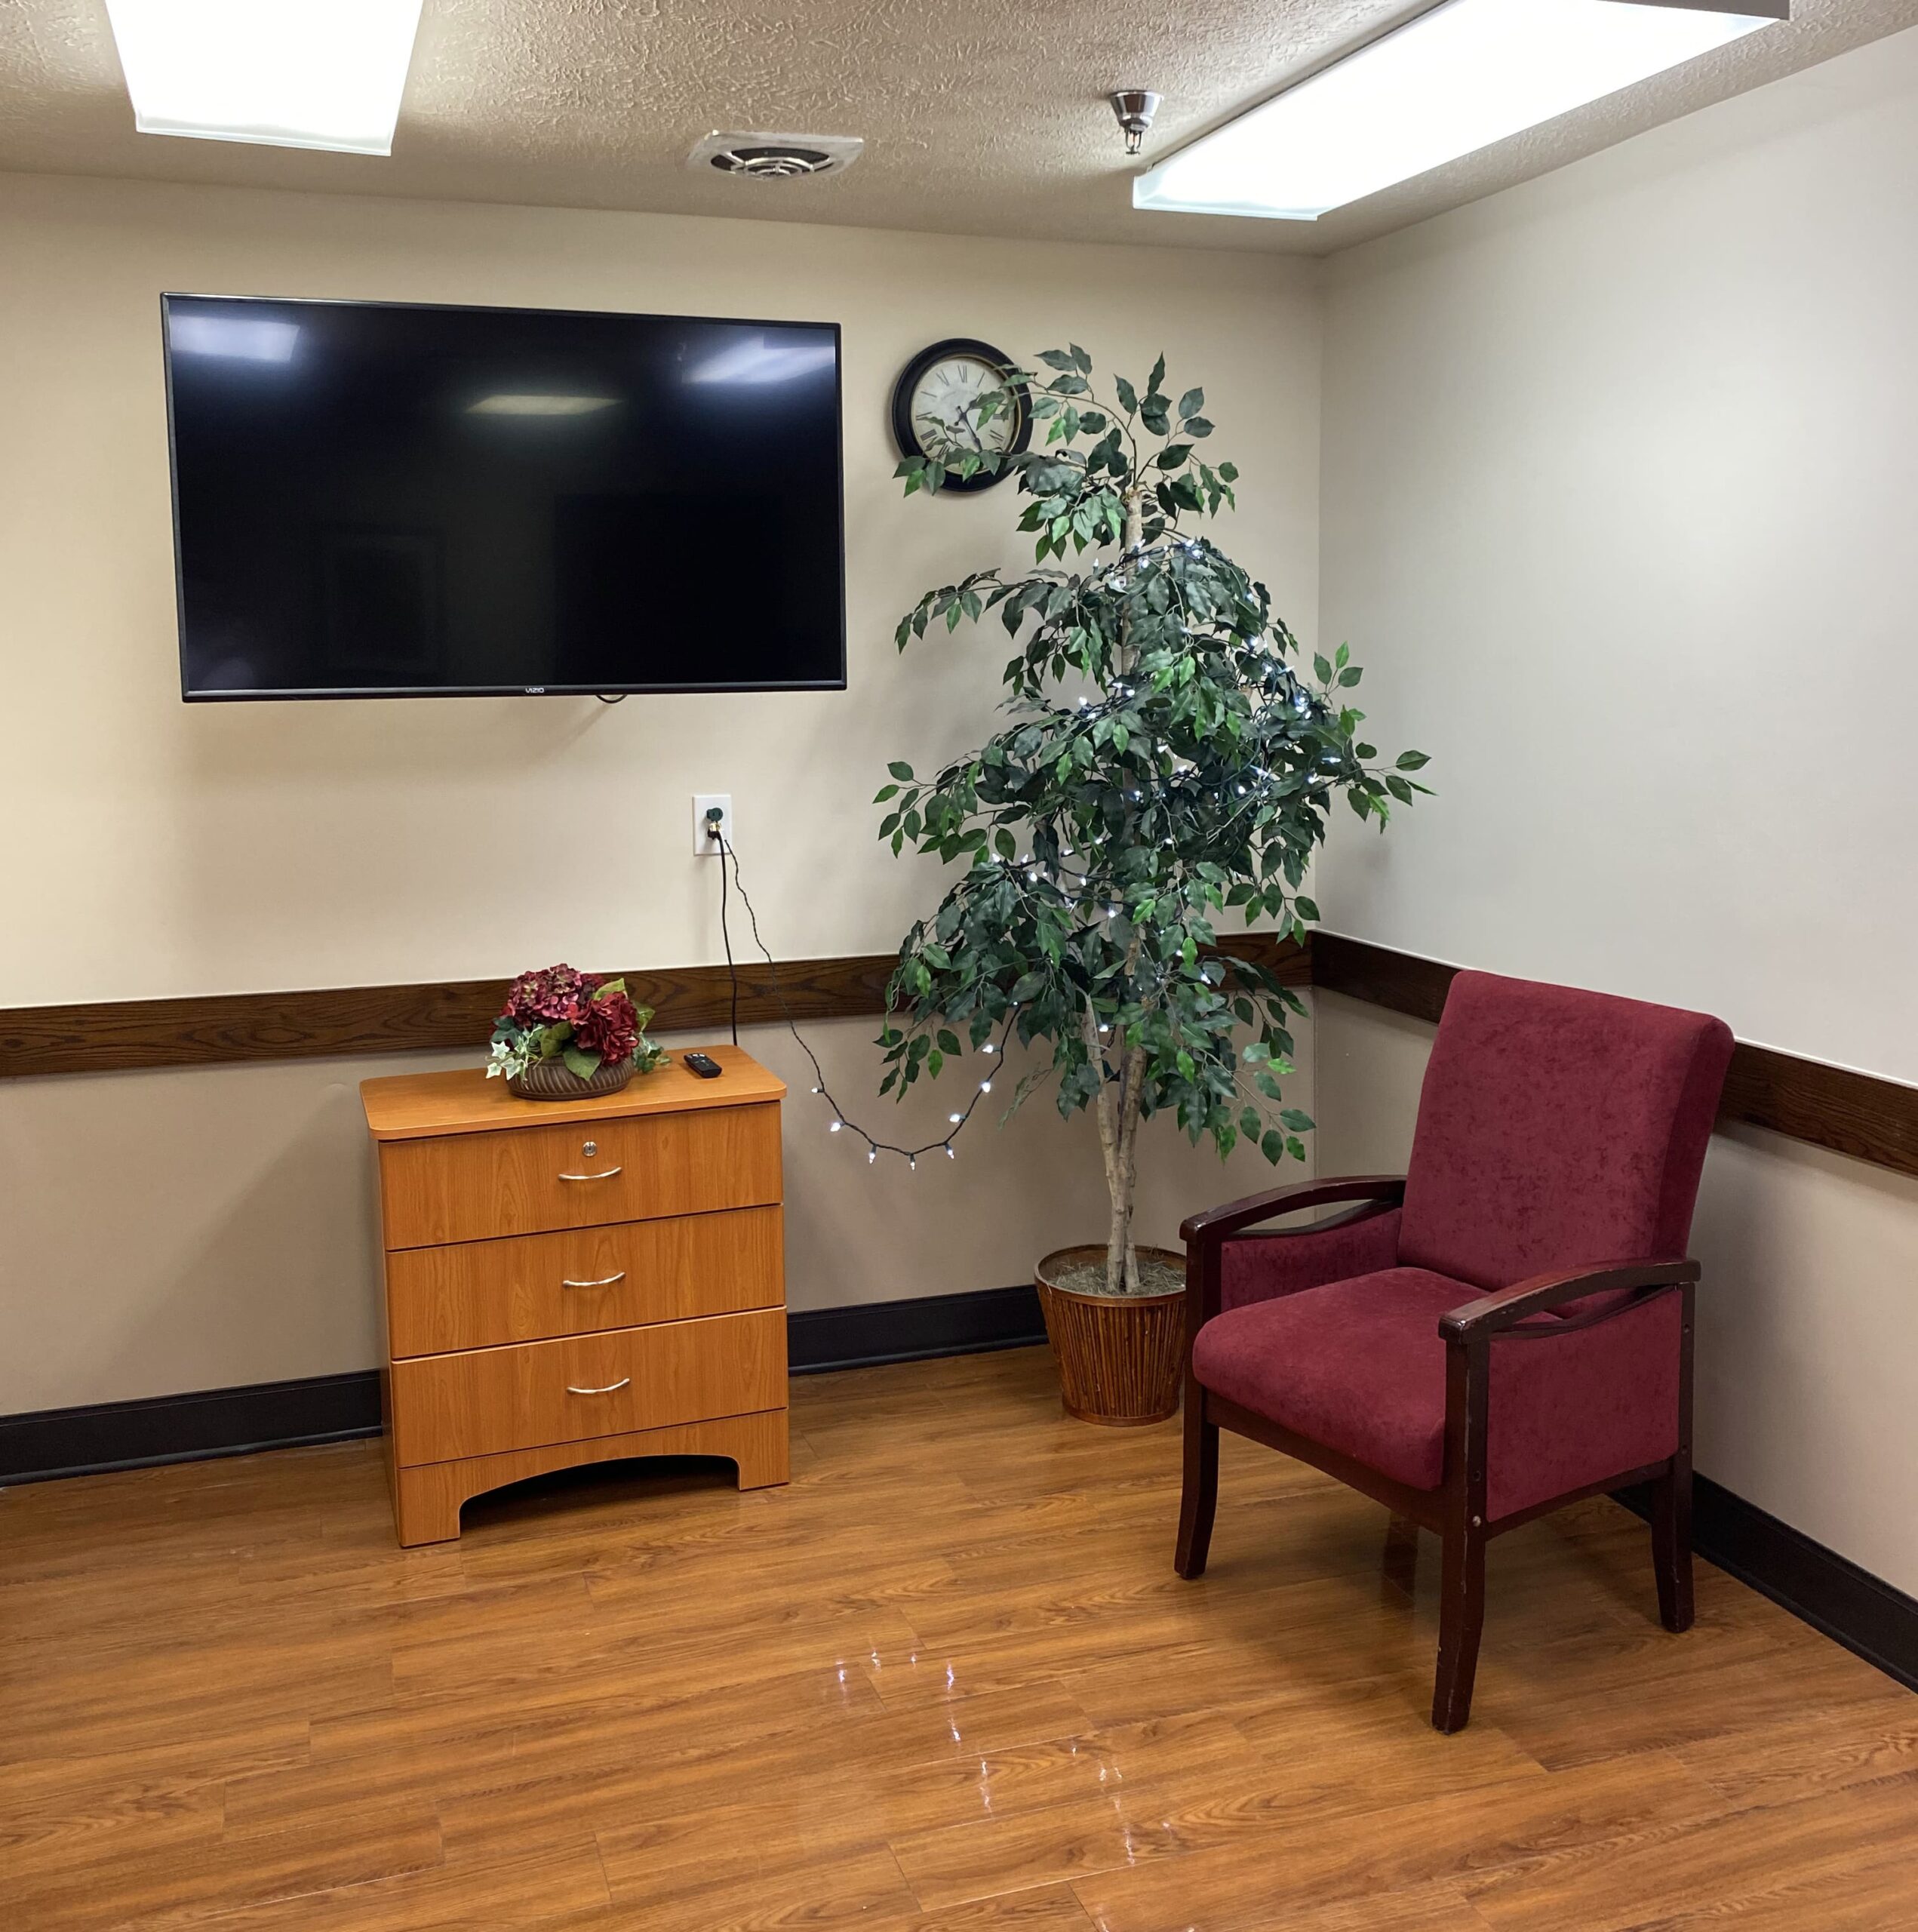 Brickyard Healthcare Richmond Care Center sitting area with TV